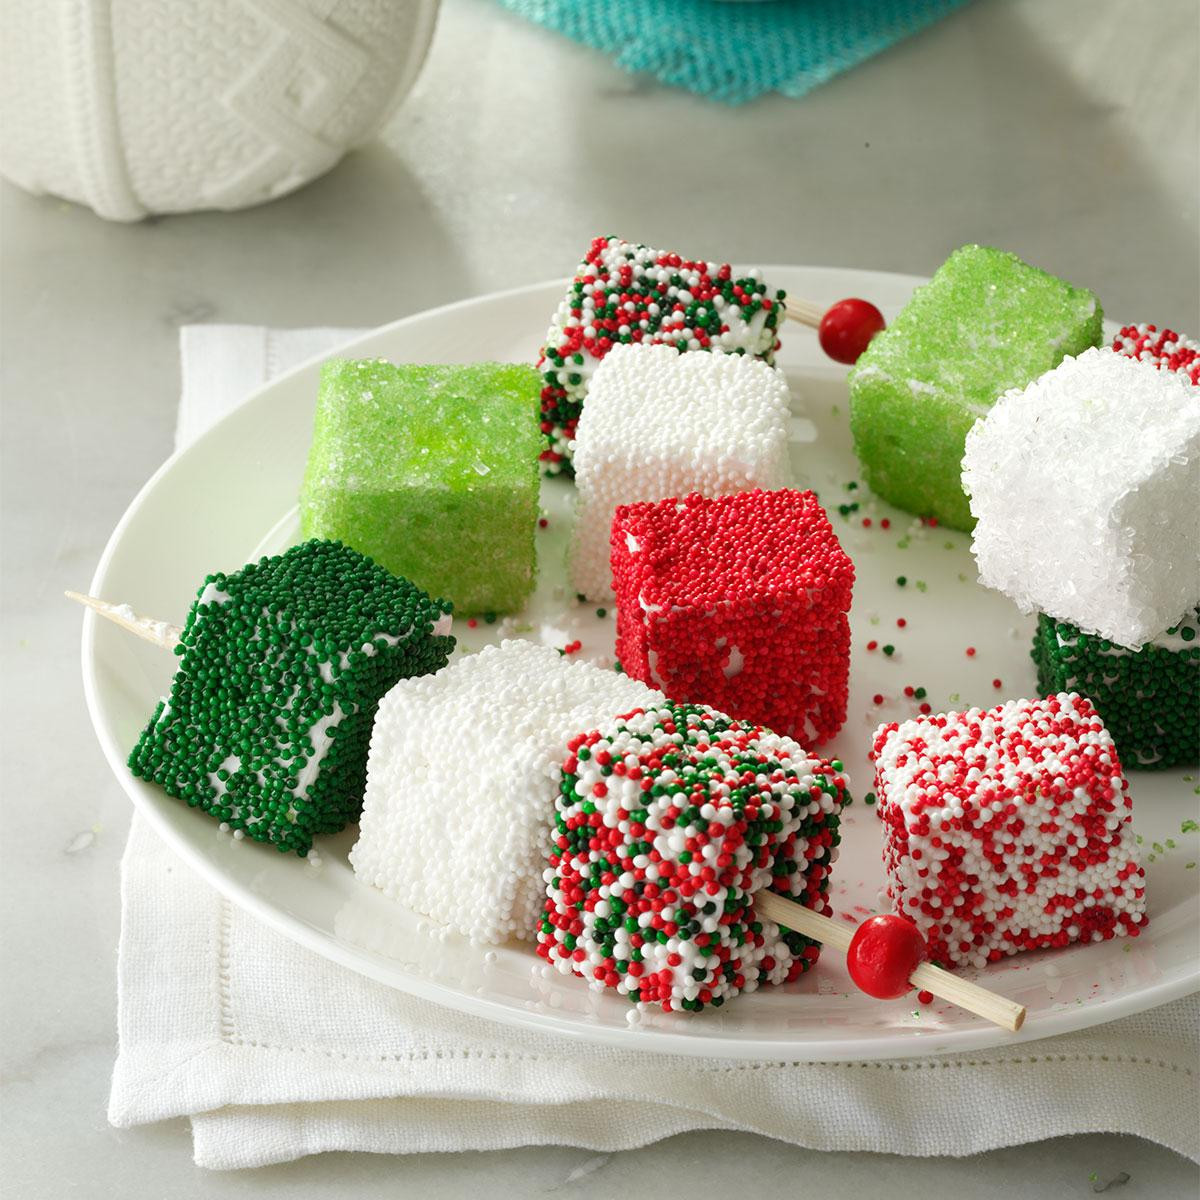 Recipes For Christmas Candy
 Homemade Holiday Marshmallows Recipe